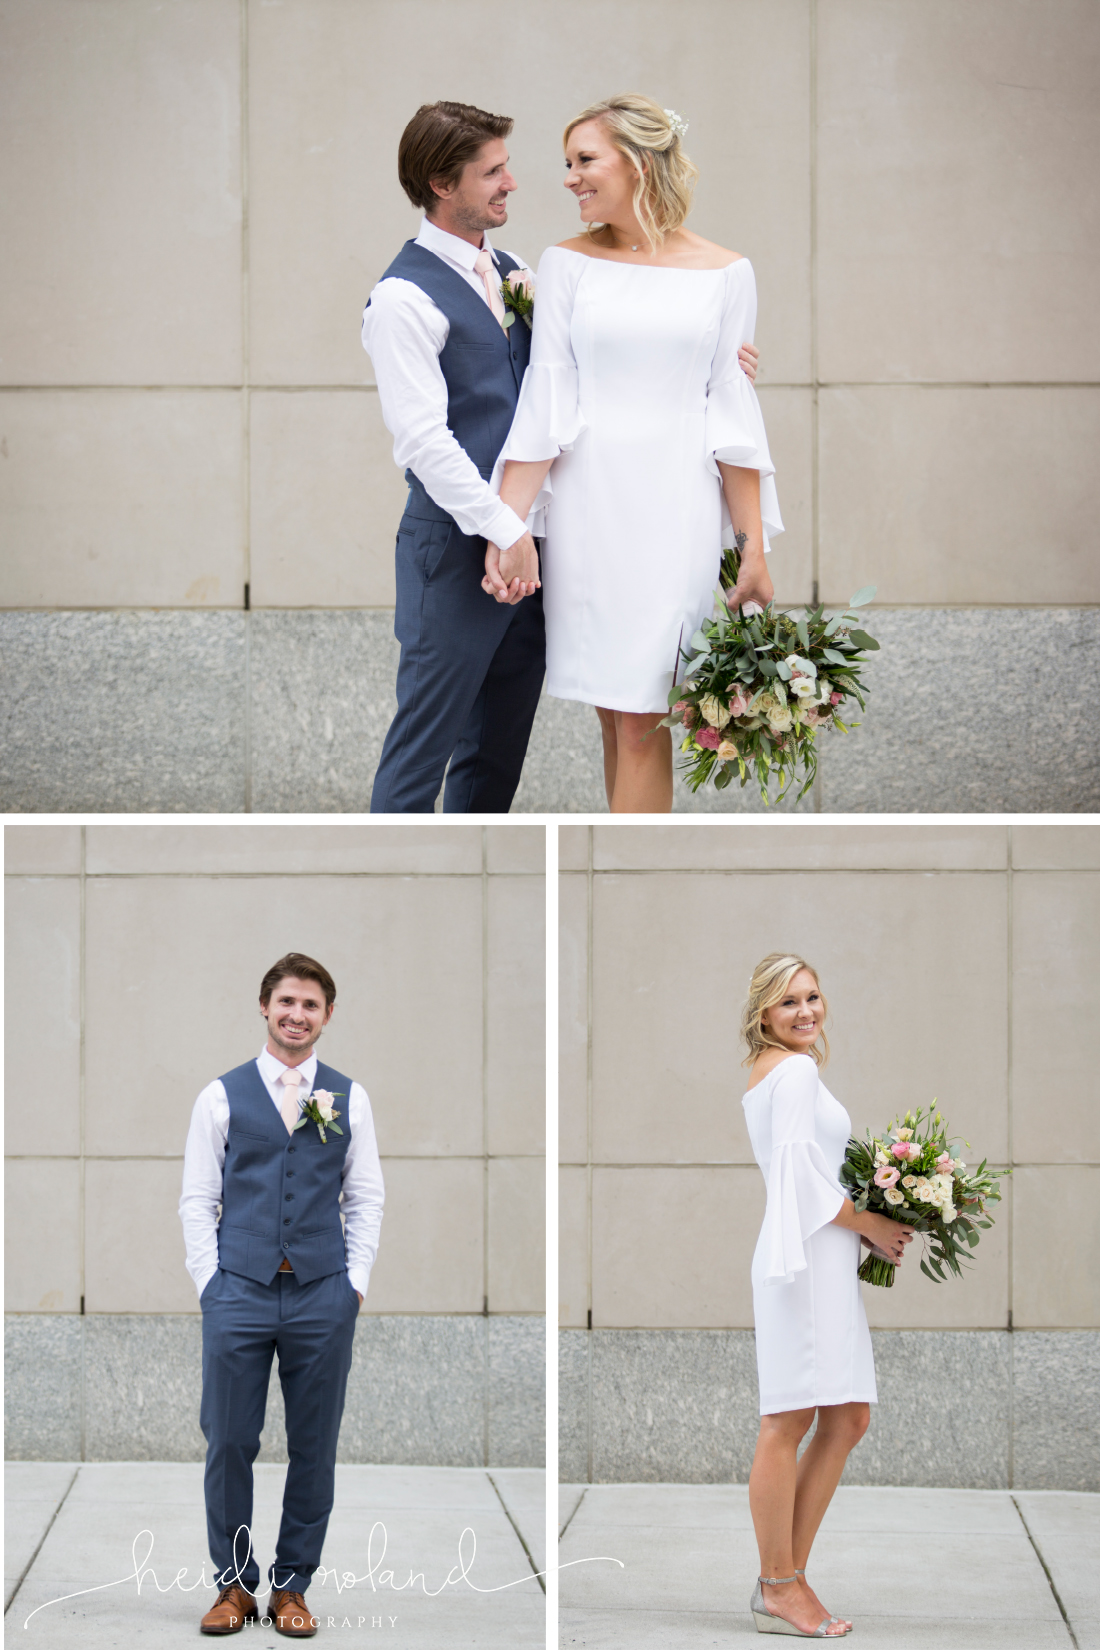 Groom in vest, bride in cocktail dress